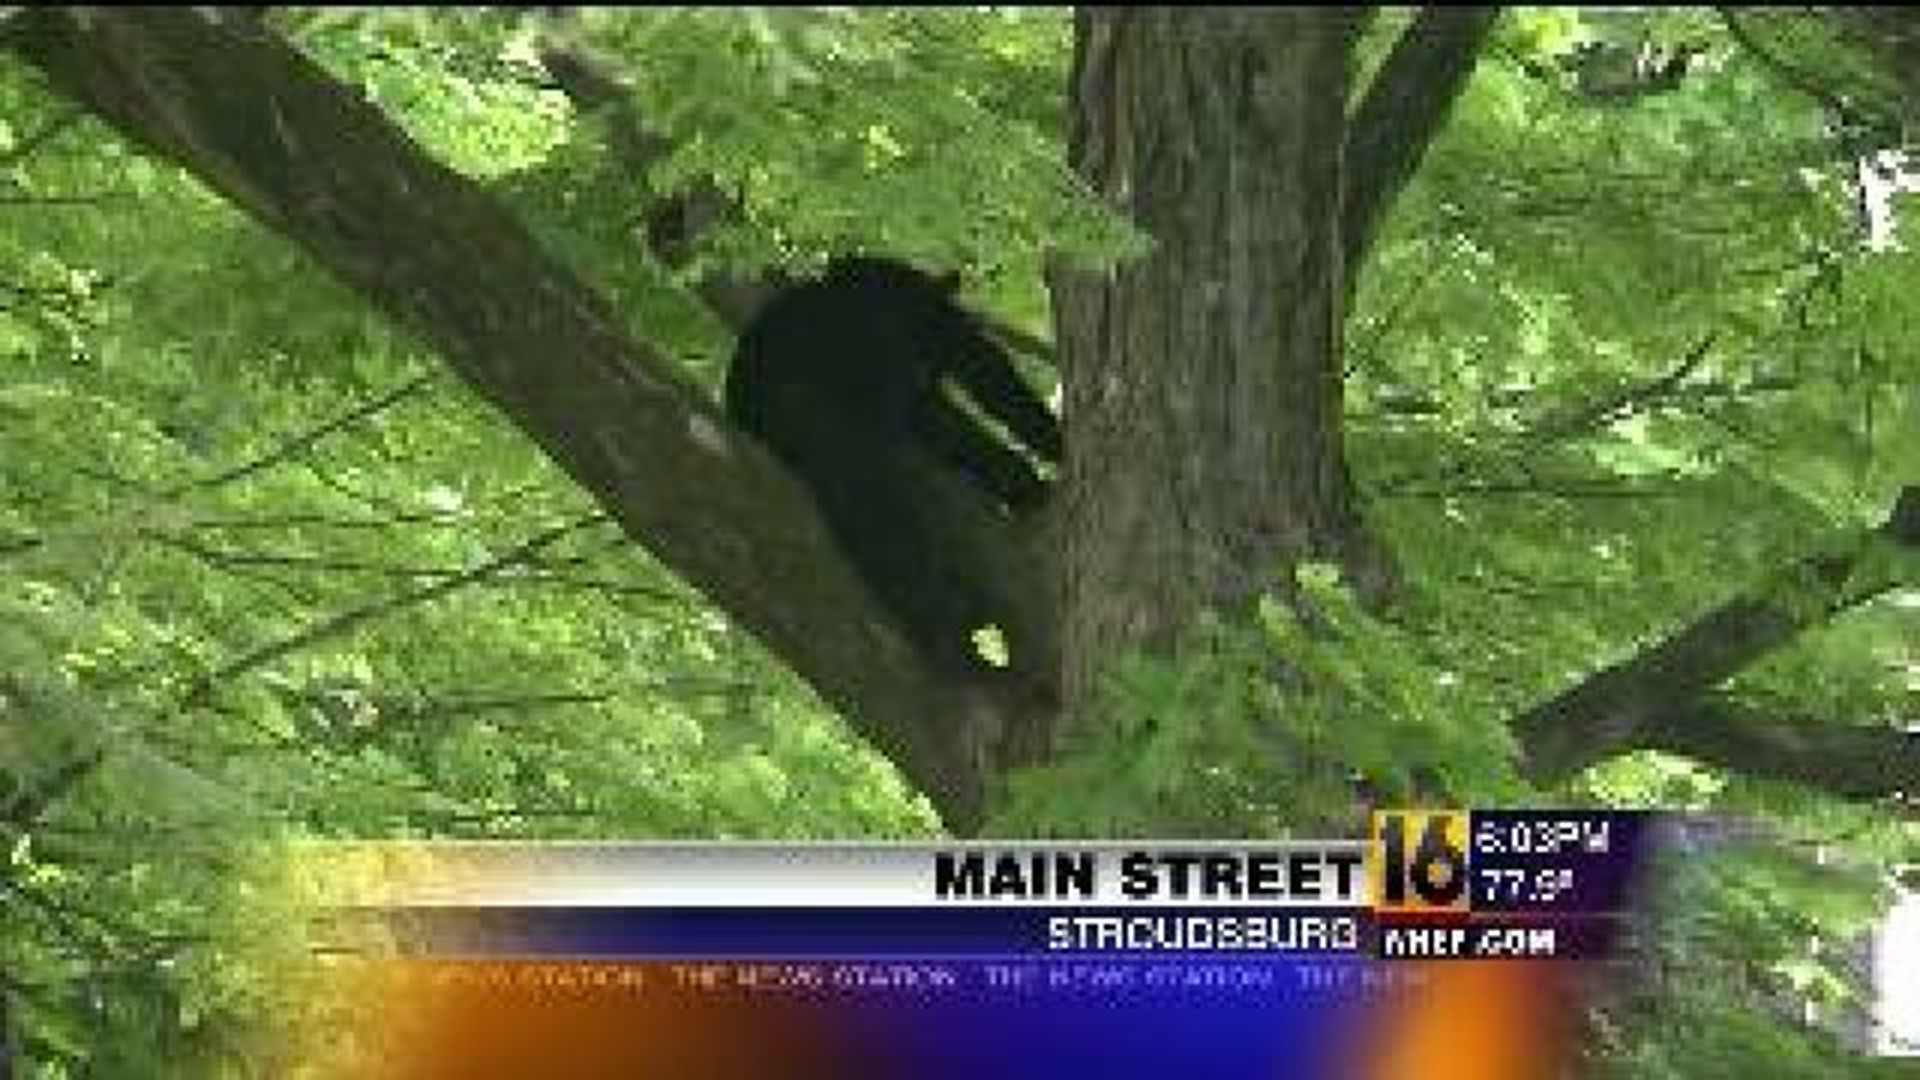 Bear in the Borough